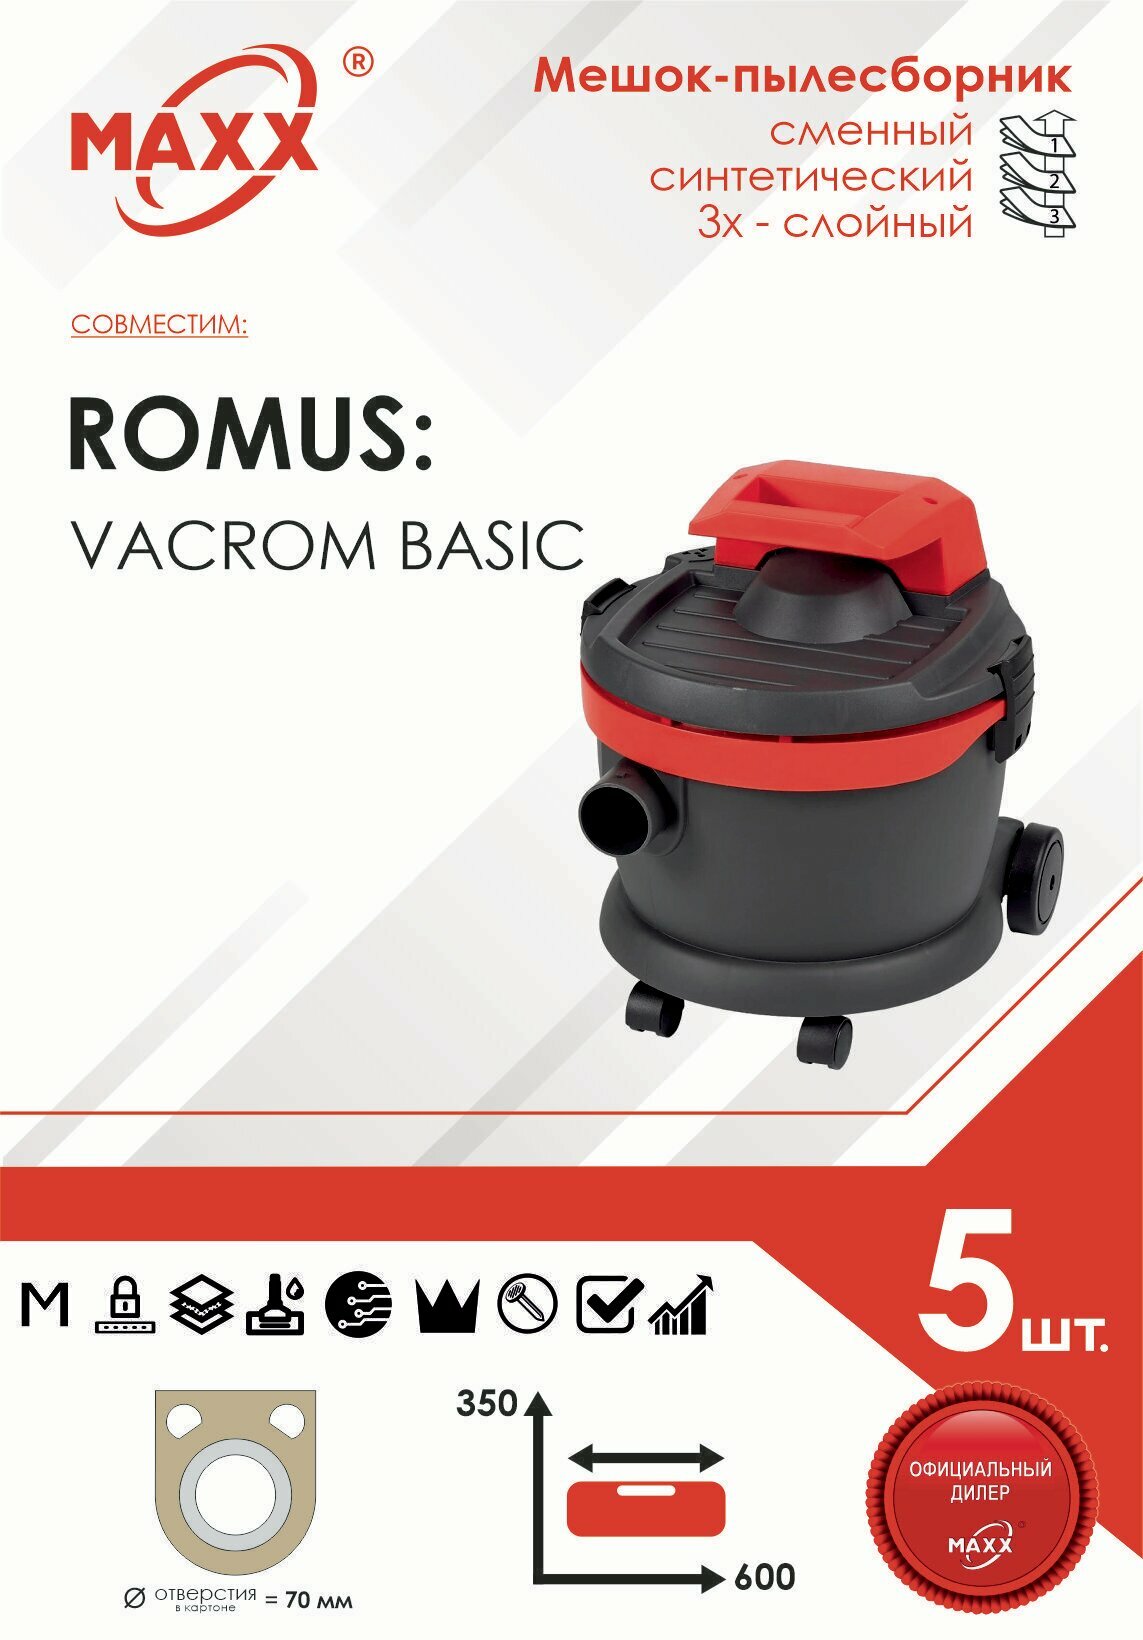 Мешок - пылесборник 5 шт. для пылесоса ROMUS VACROM BASIC